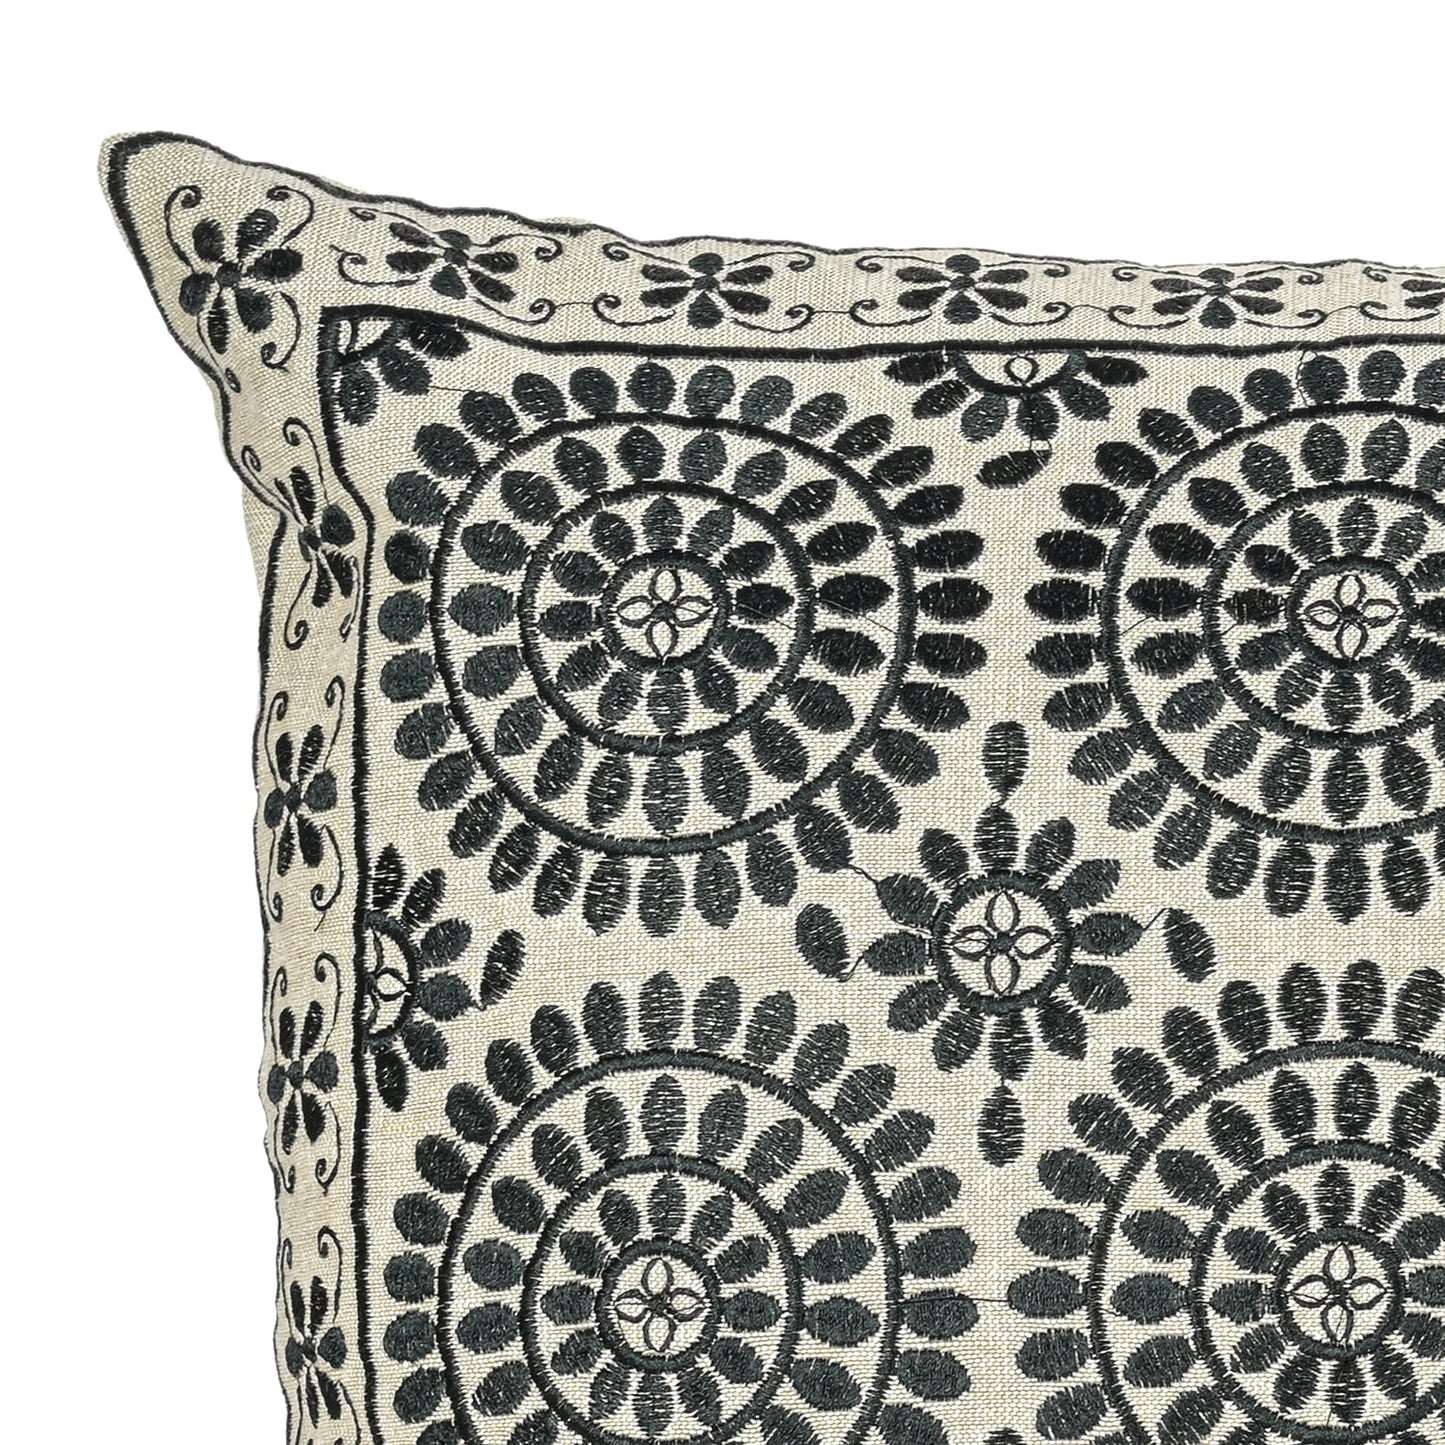 Black Geometric Jaipur Throw Pillow Cover - I